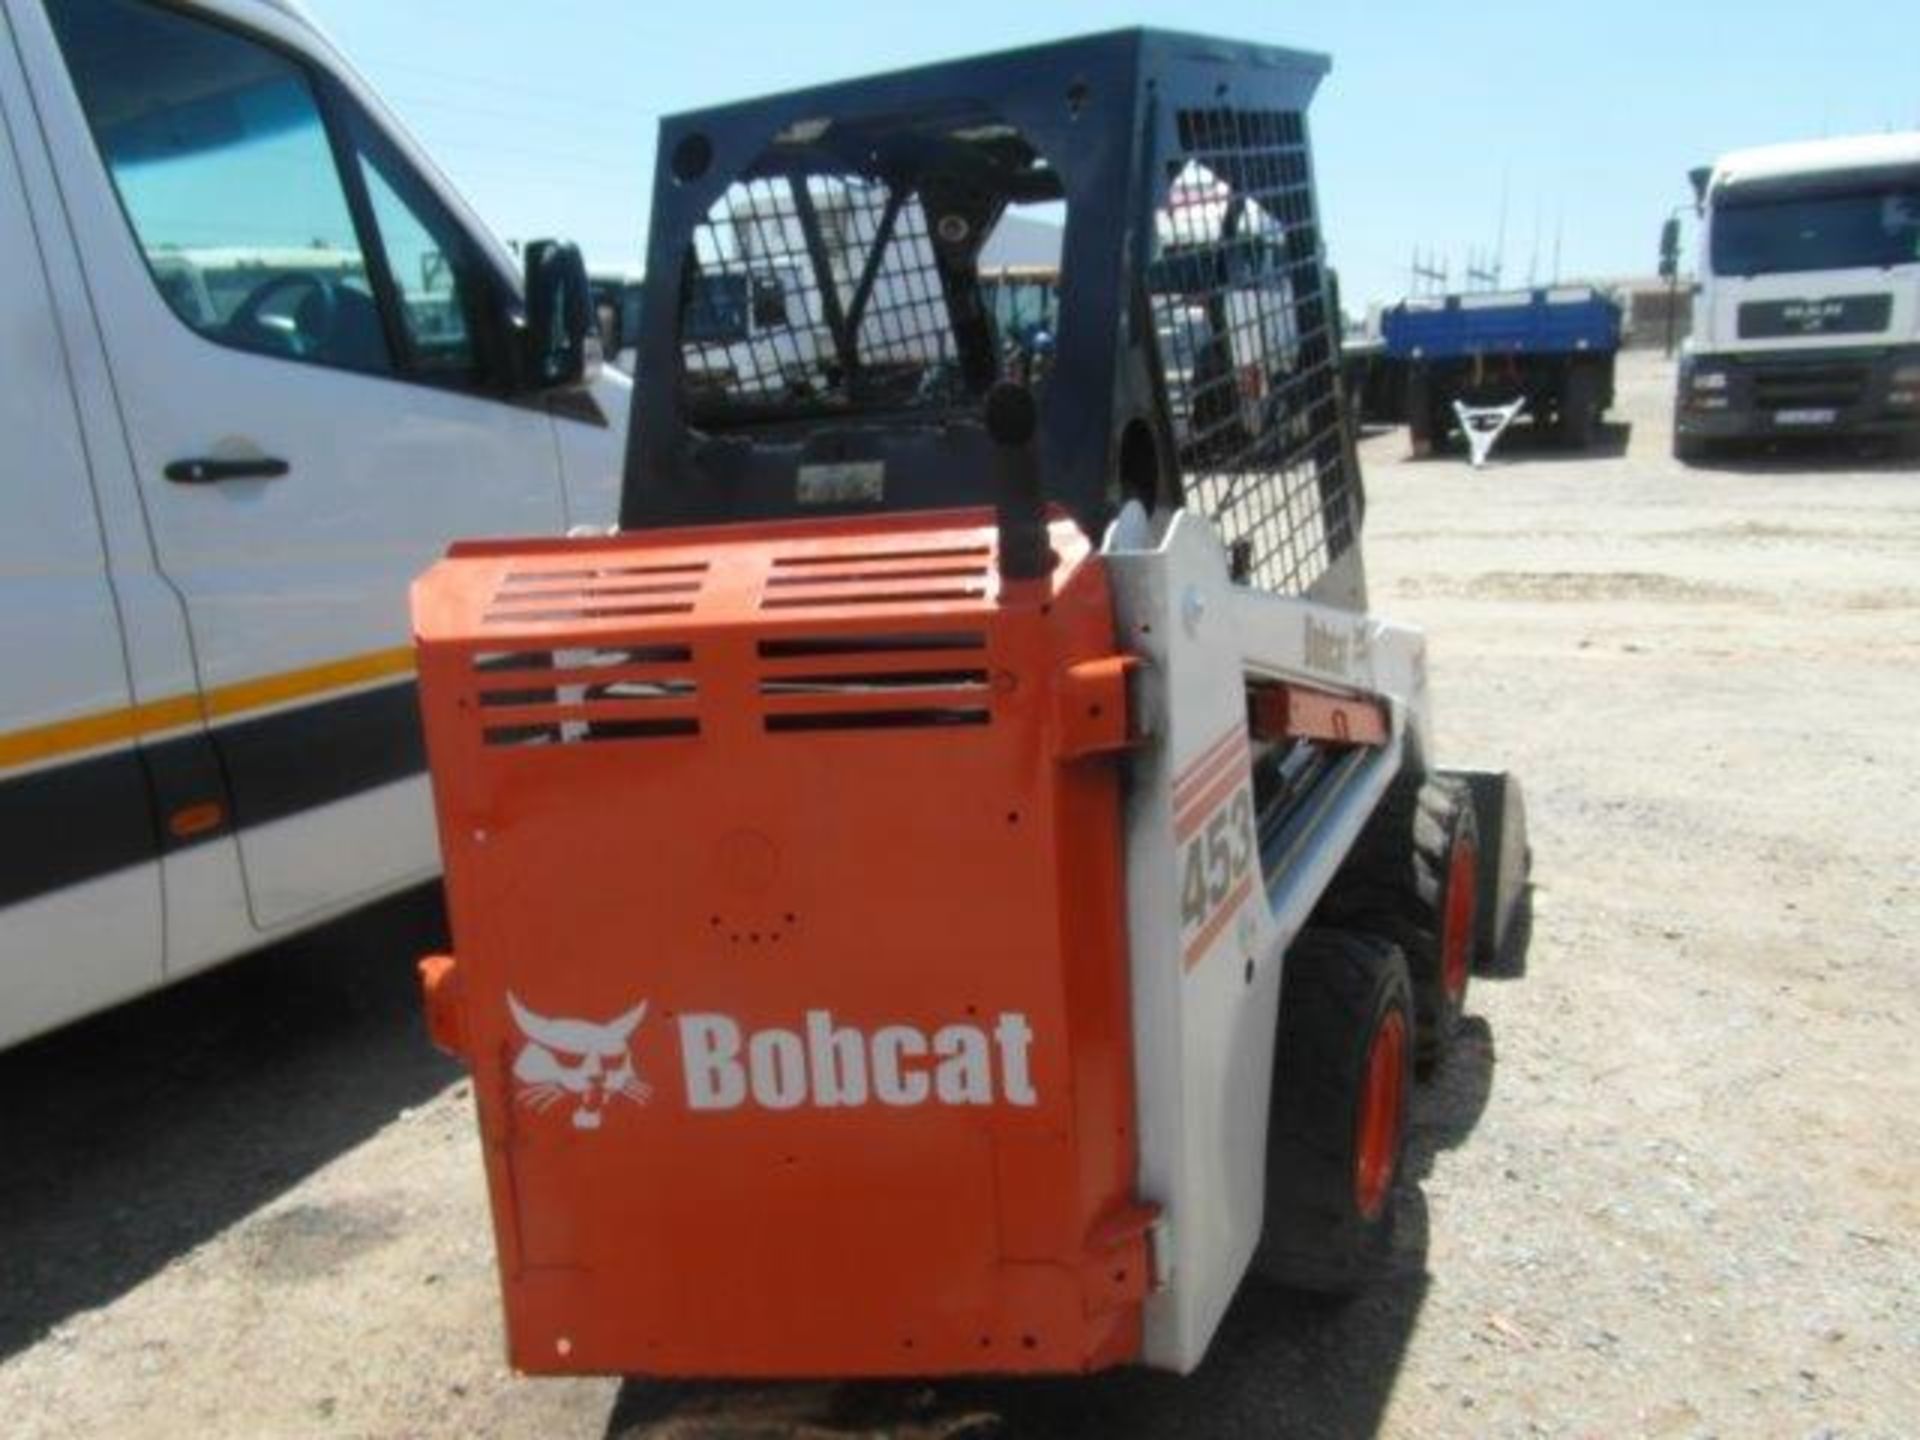 Bobcat 453 Skid Steer (S#: 515112835) (1902 hrs )(No Battery,Rear Glass Missing) - Image 4 of 5